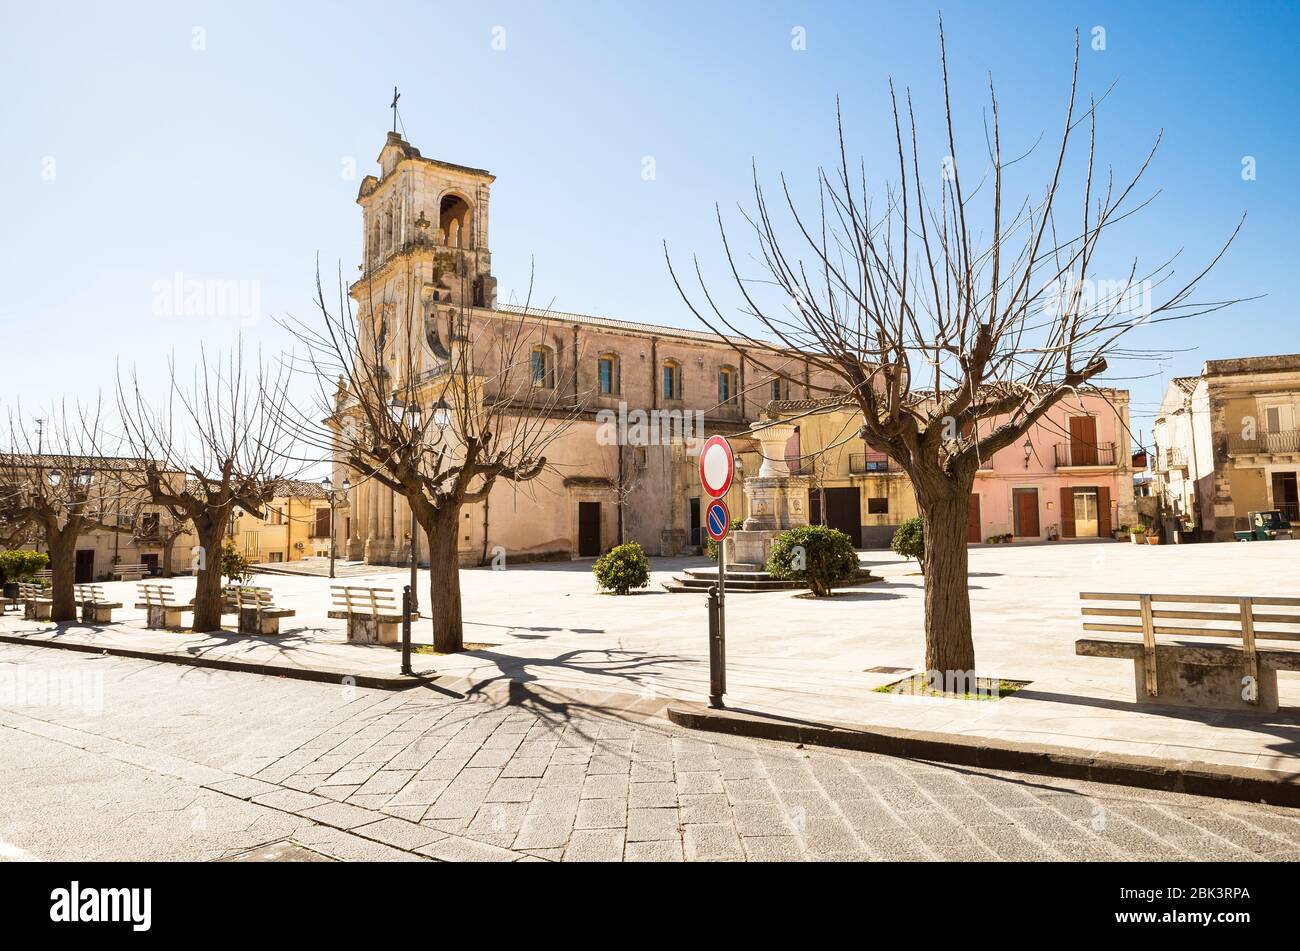 Architektonische Sehenswürdigkeiten der St. Sebastiano Kirche in Ferla, Provinz Syrakus, Italien. Stockfoto